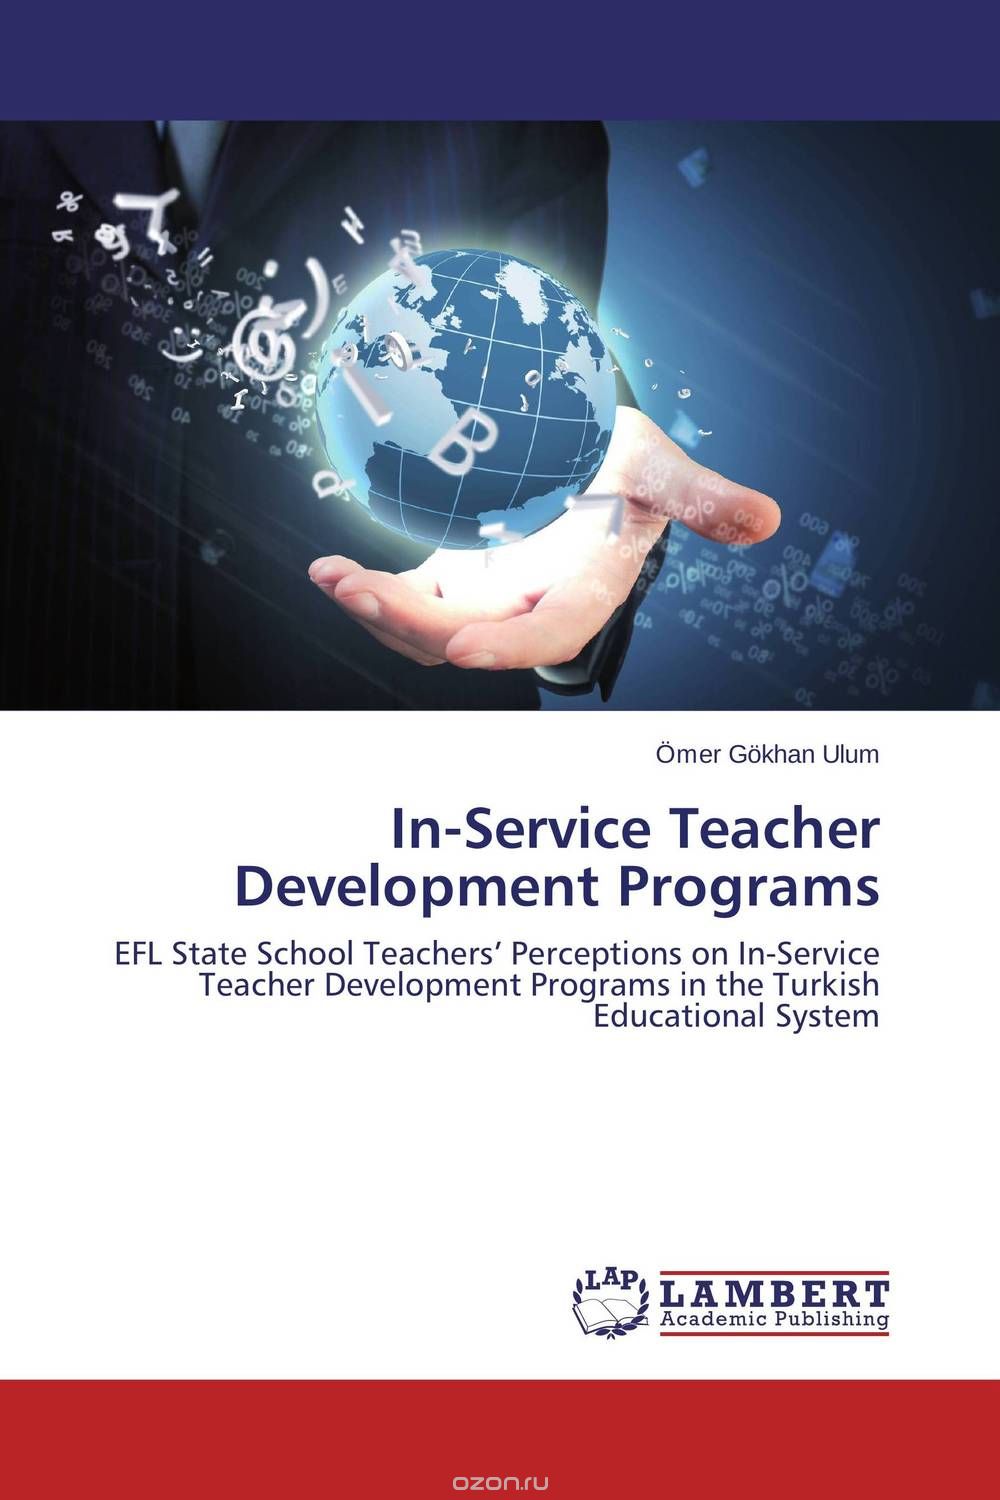 Скачать книгу "In-Service Teacher Development Programs"